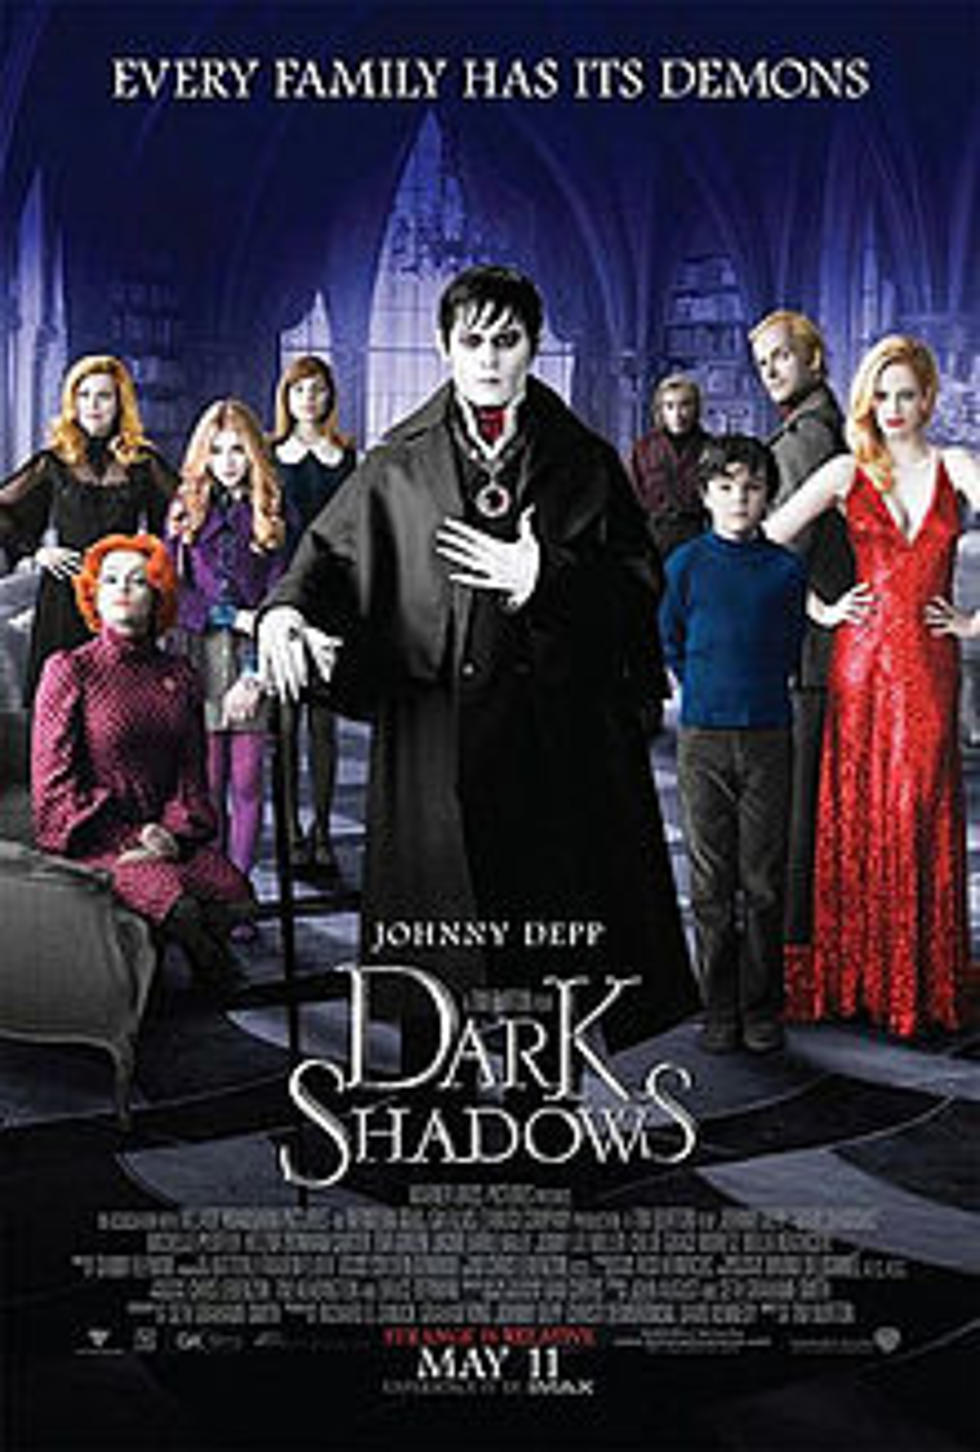 Movies & Showtimes This Weekend: ‘Dark Shadows’ [VIDEO]